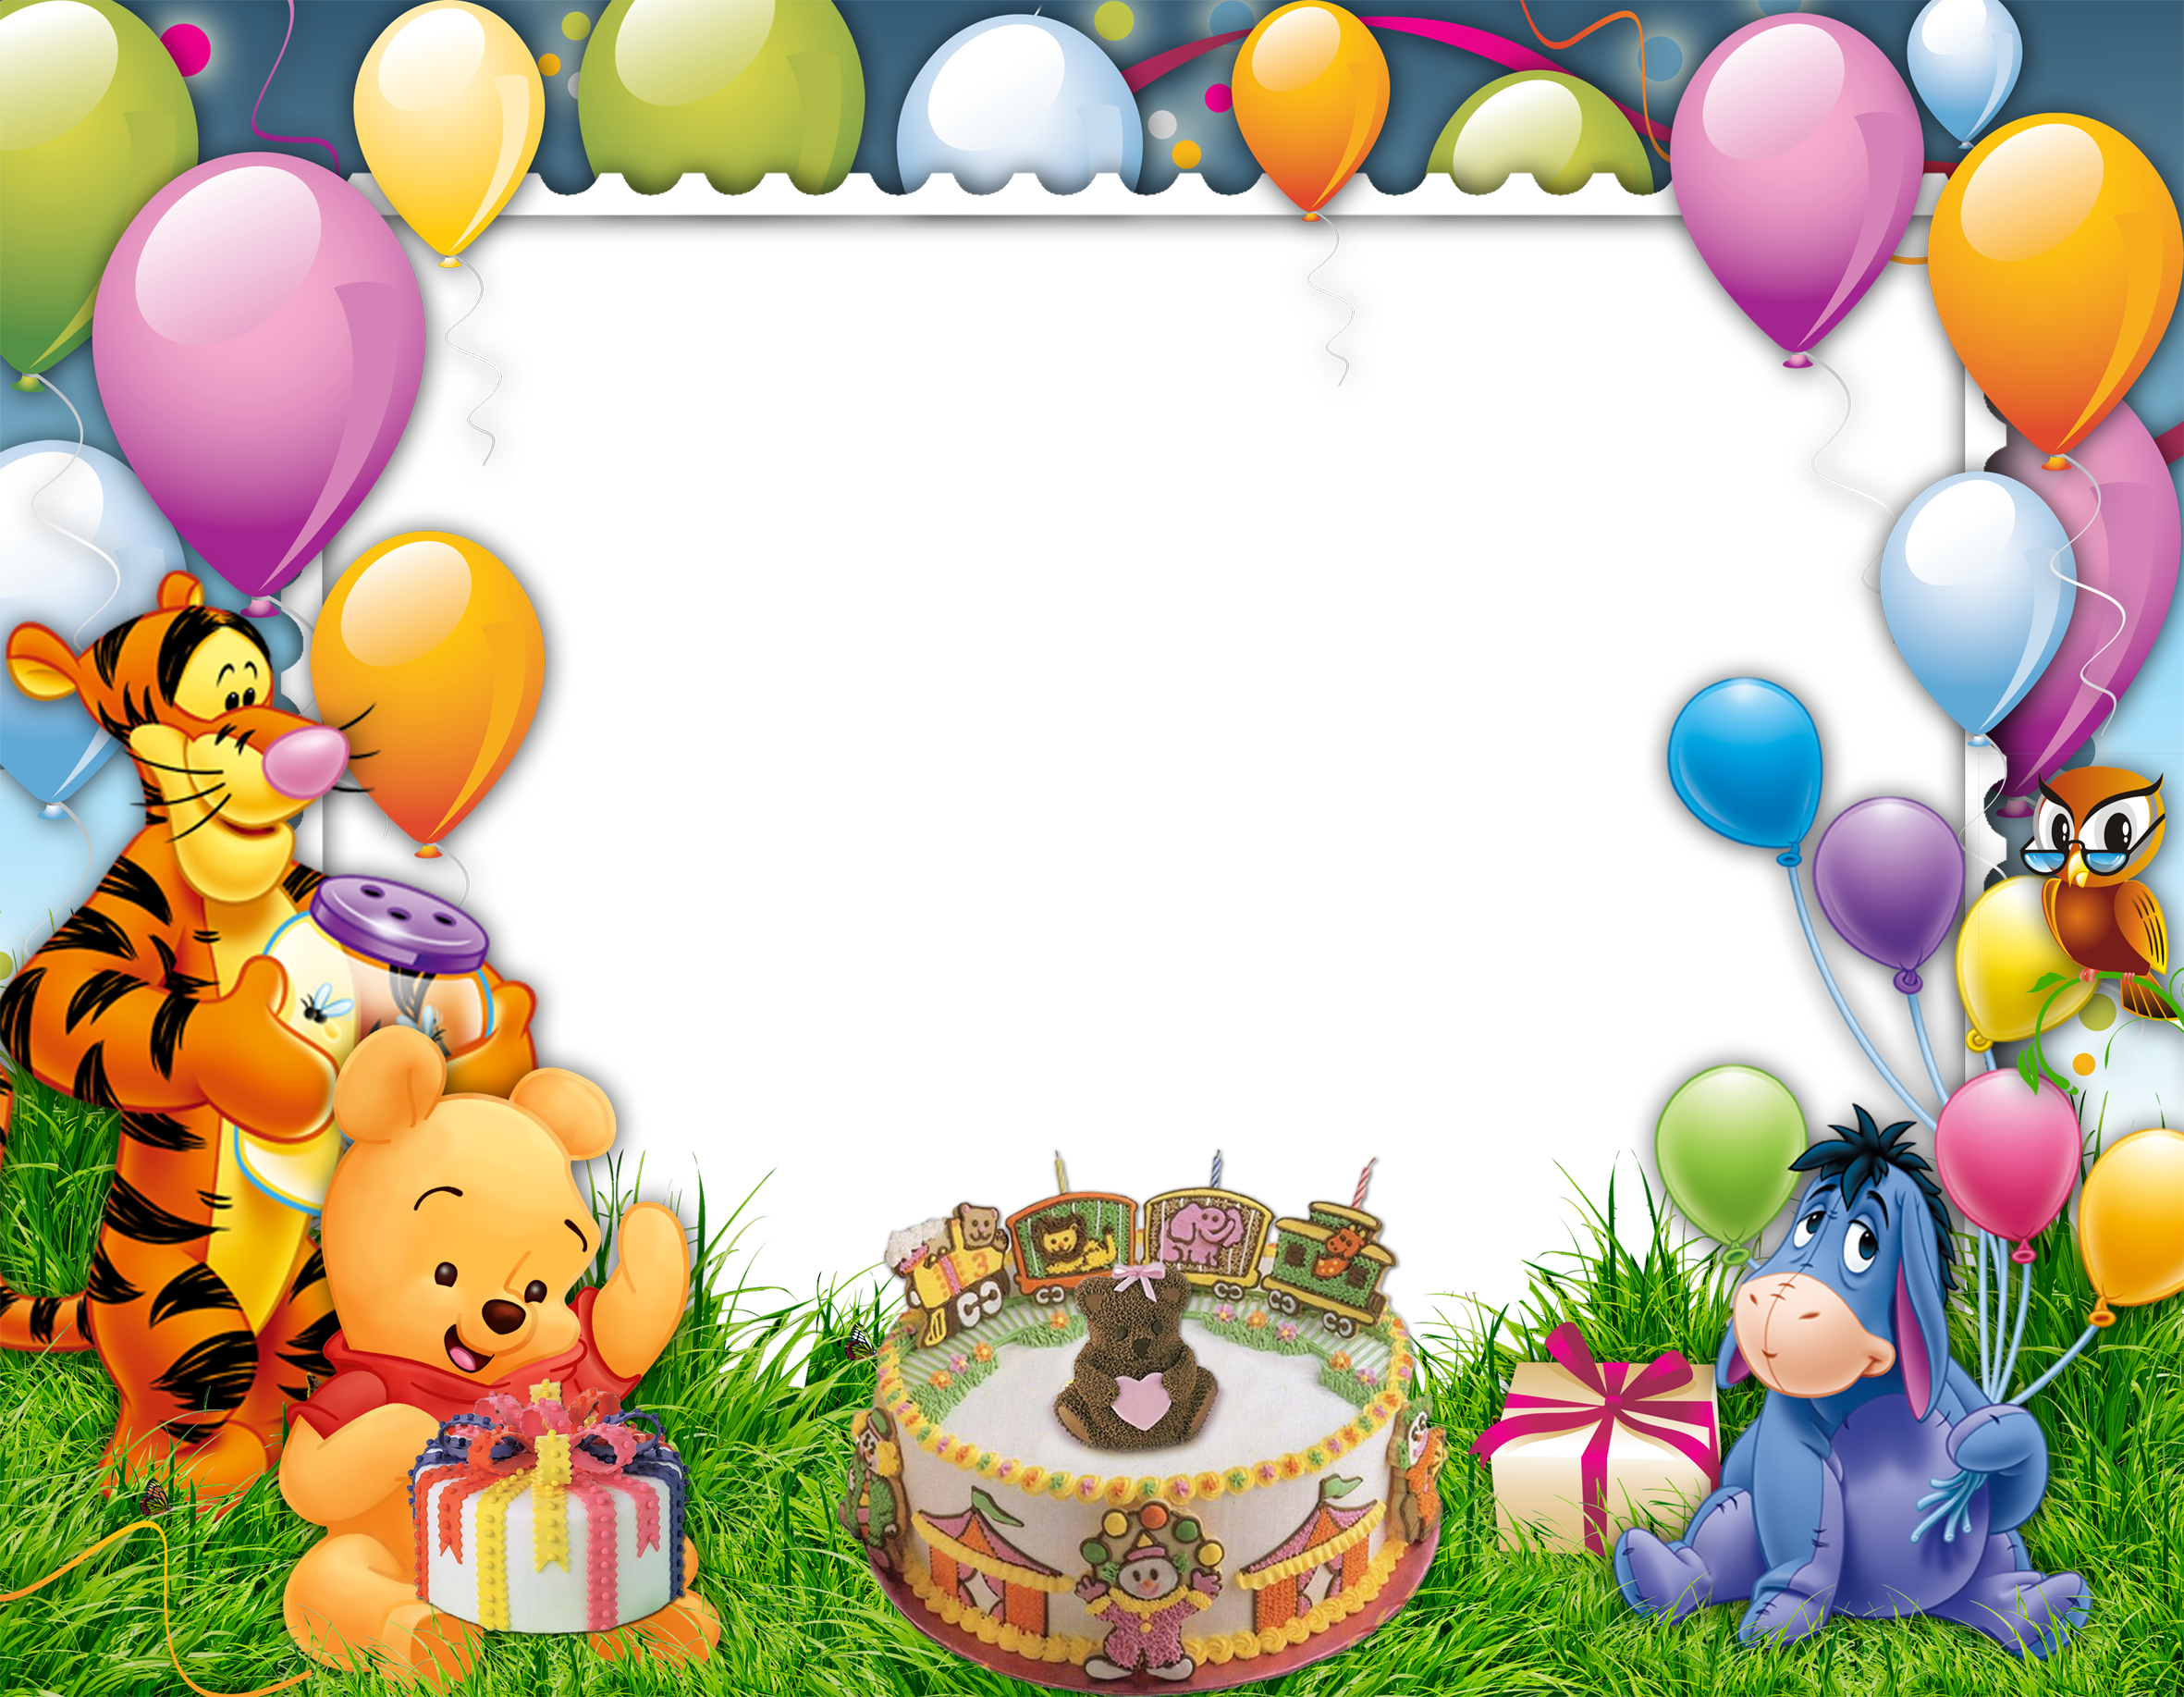 Cartoon Bbirthday Frame png HD image free download. Birthday frames, Winnie the pooh birthday, Happy birthday frame